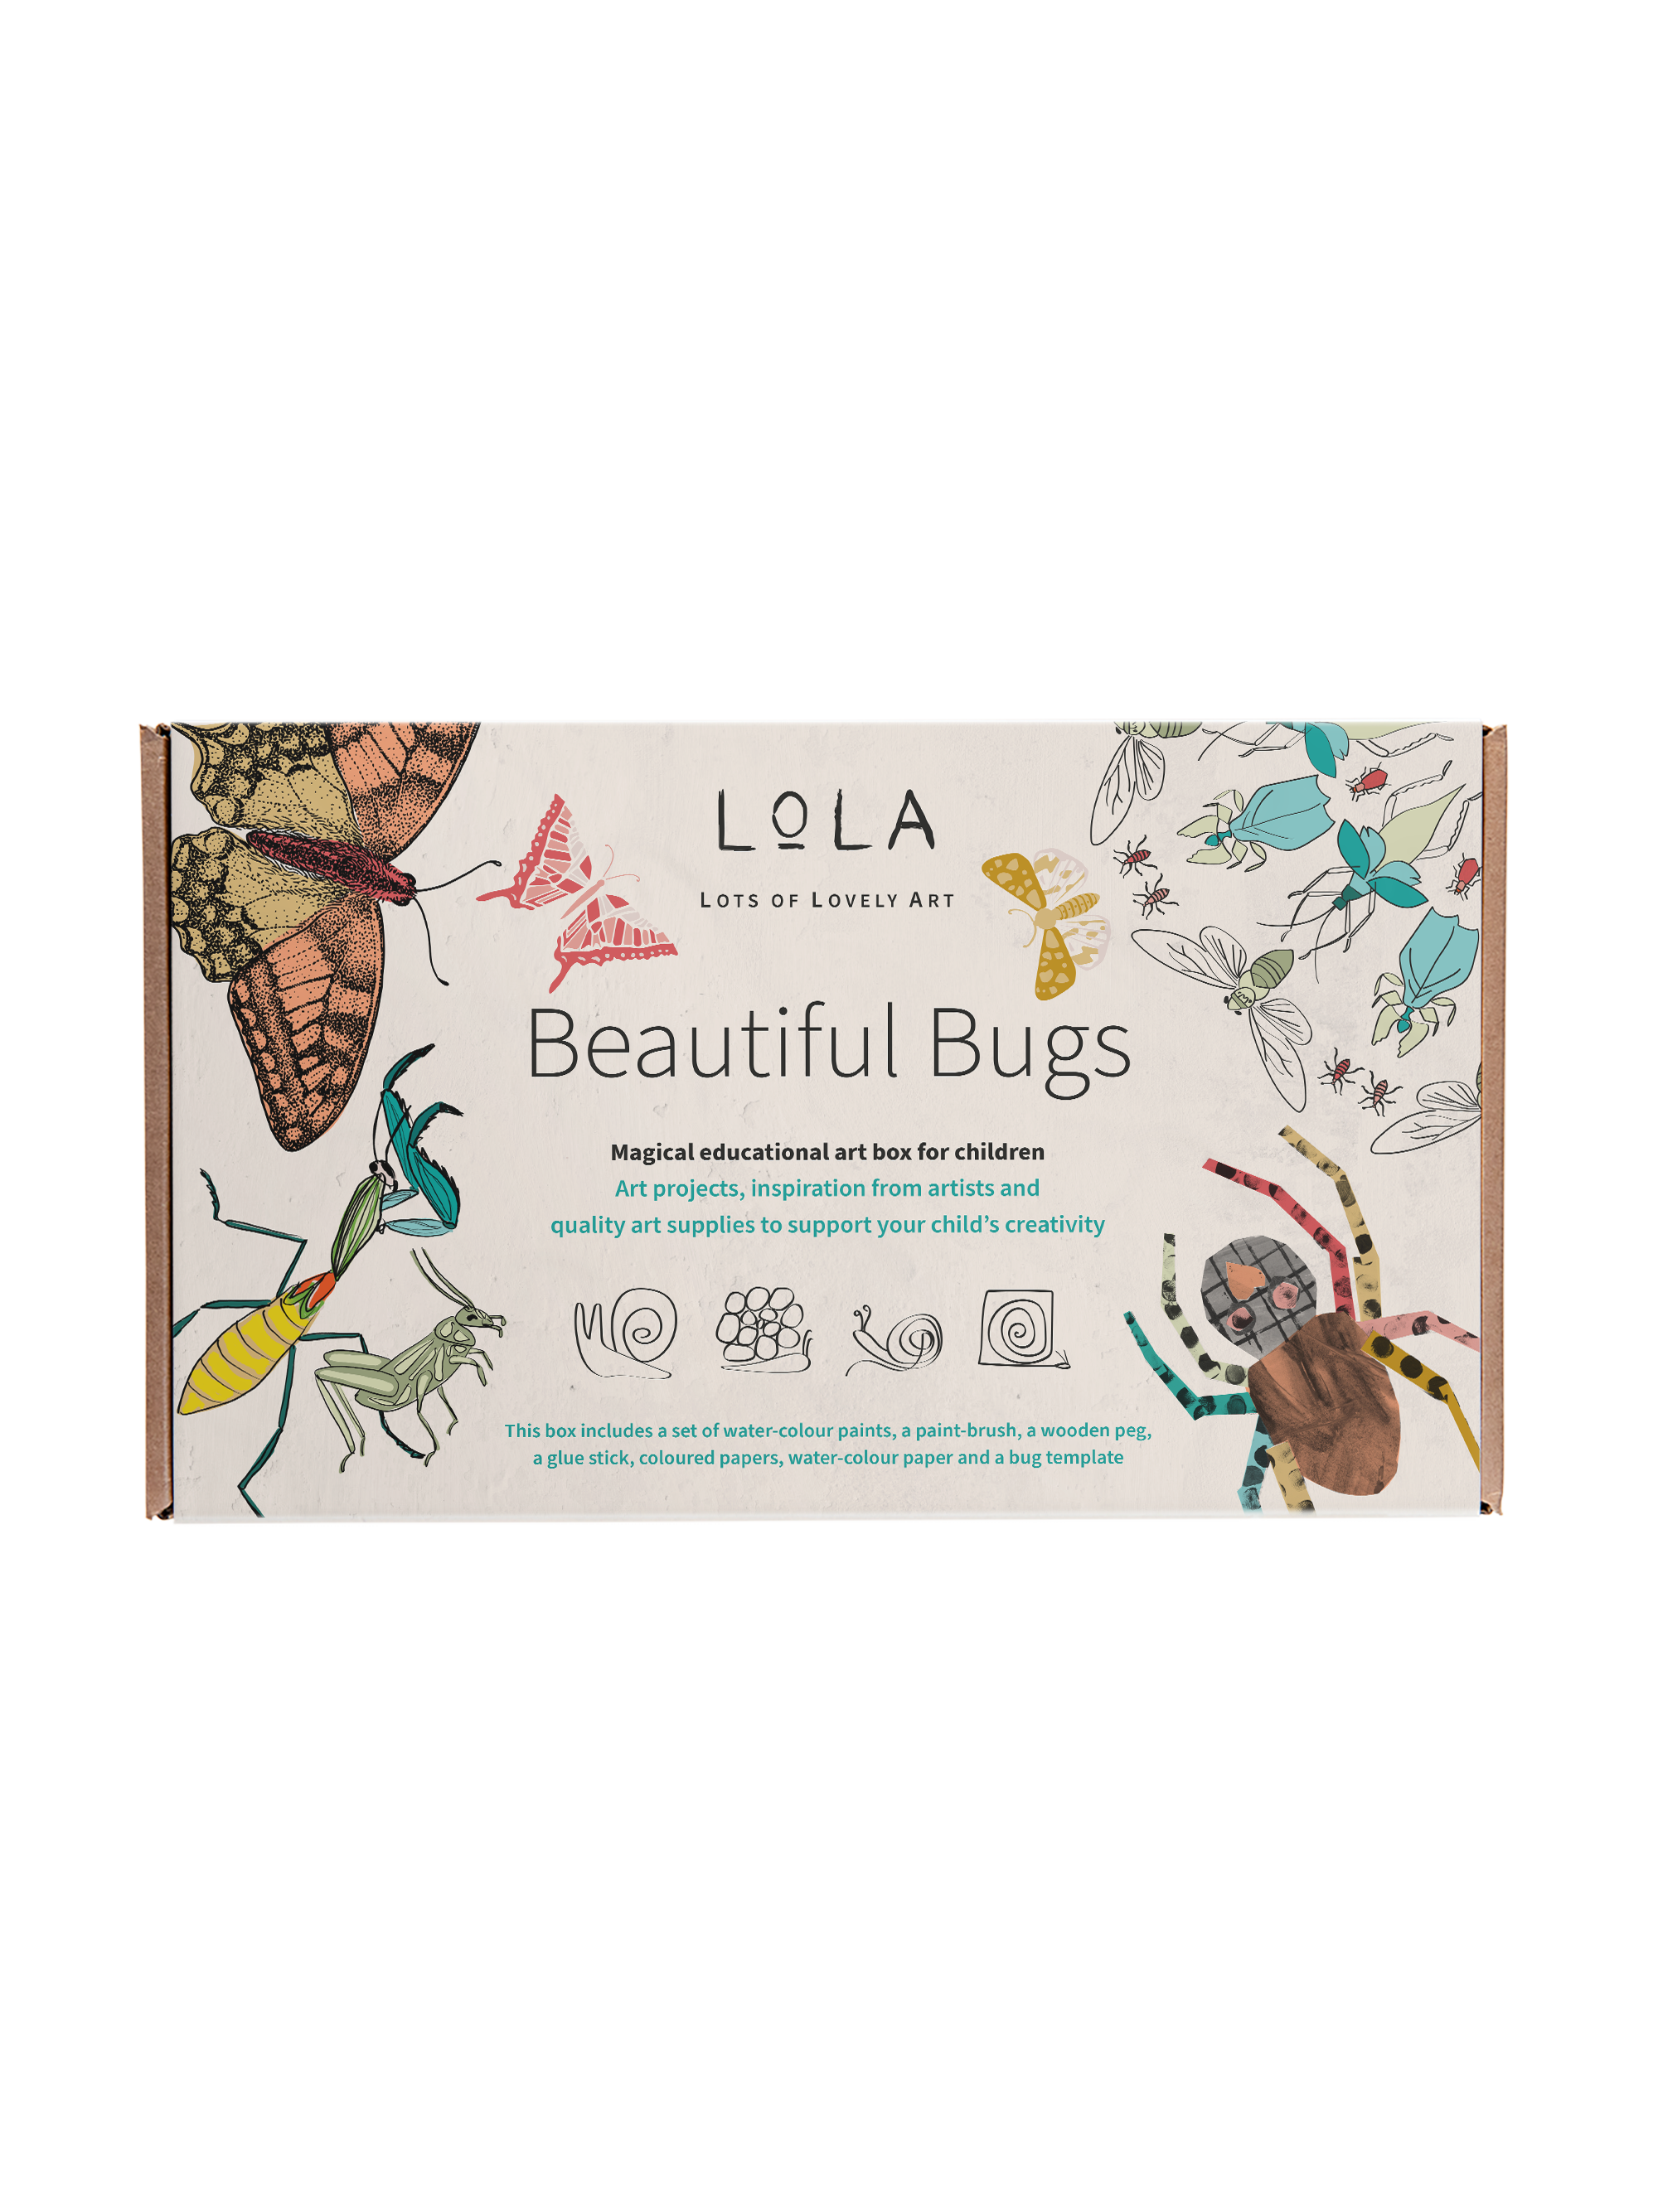 Lots of Lovely Art Beautiful Bugs Art Box for Children